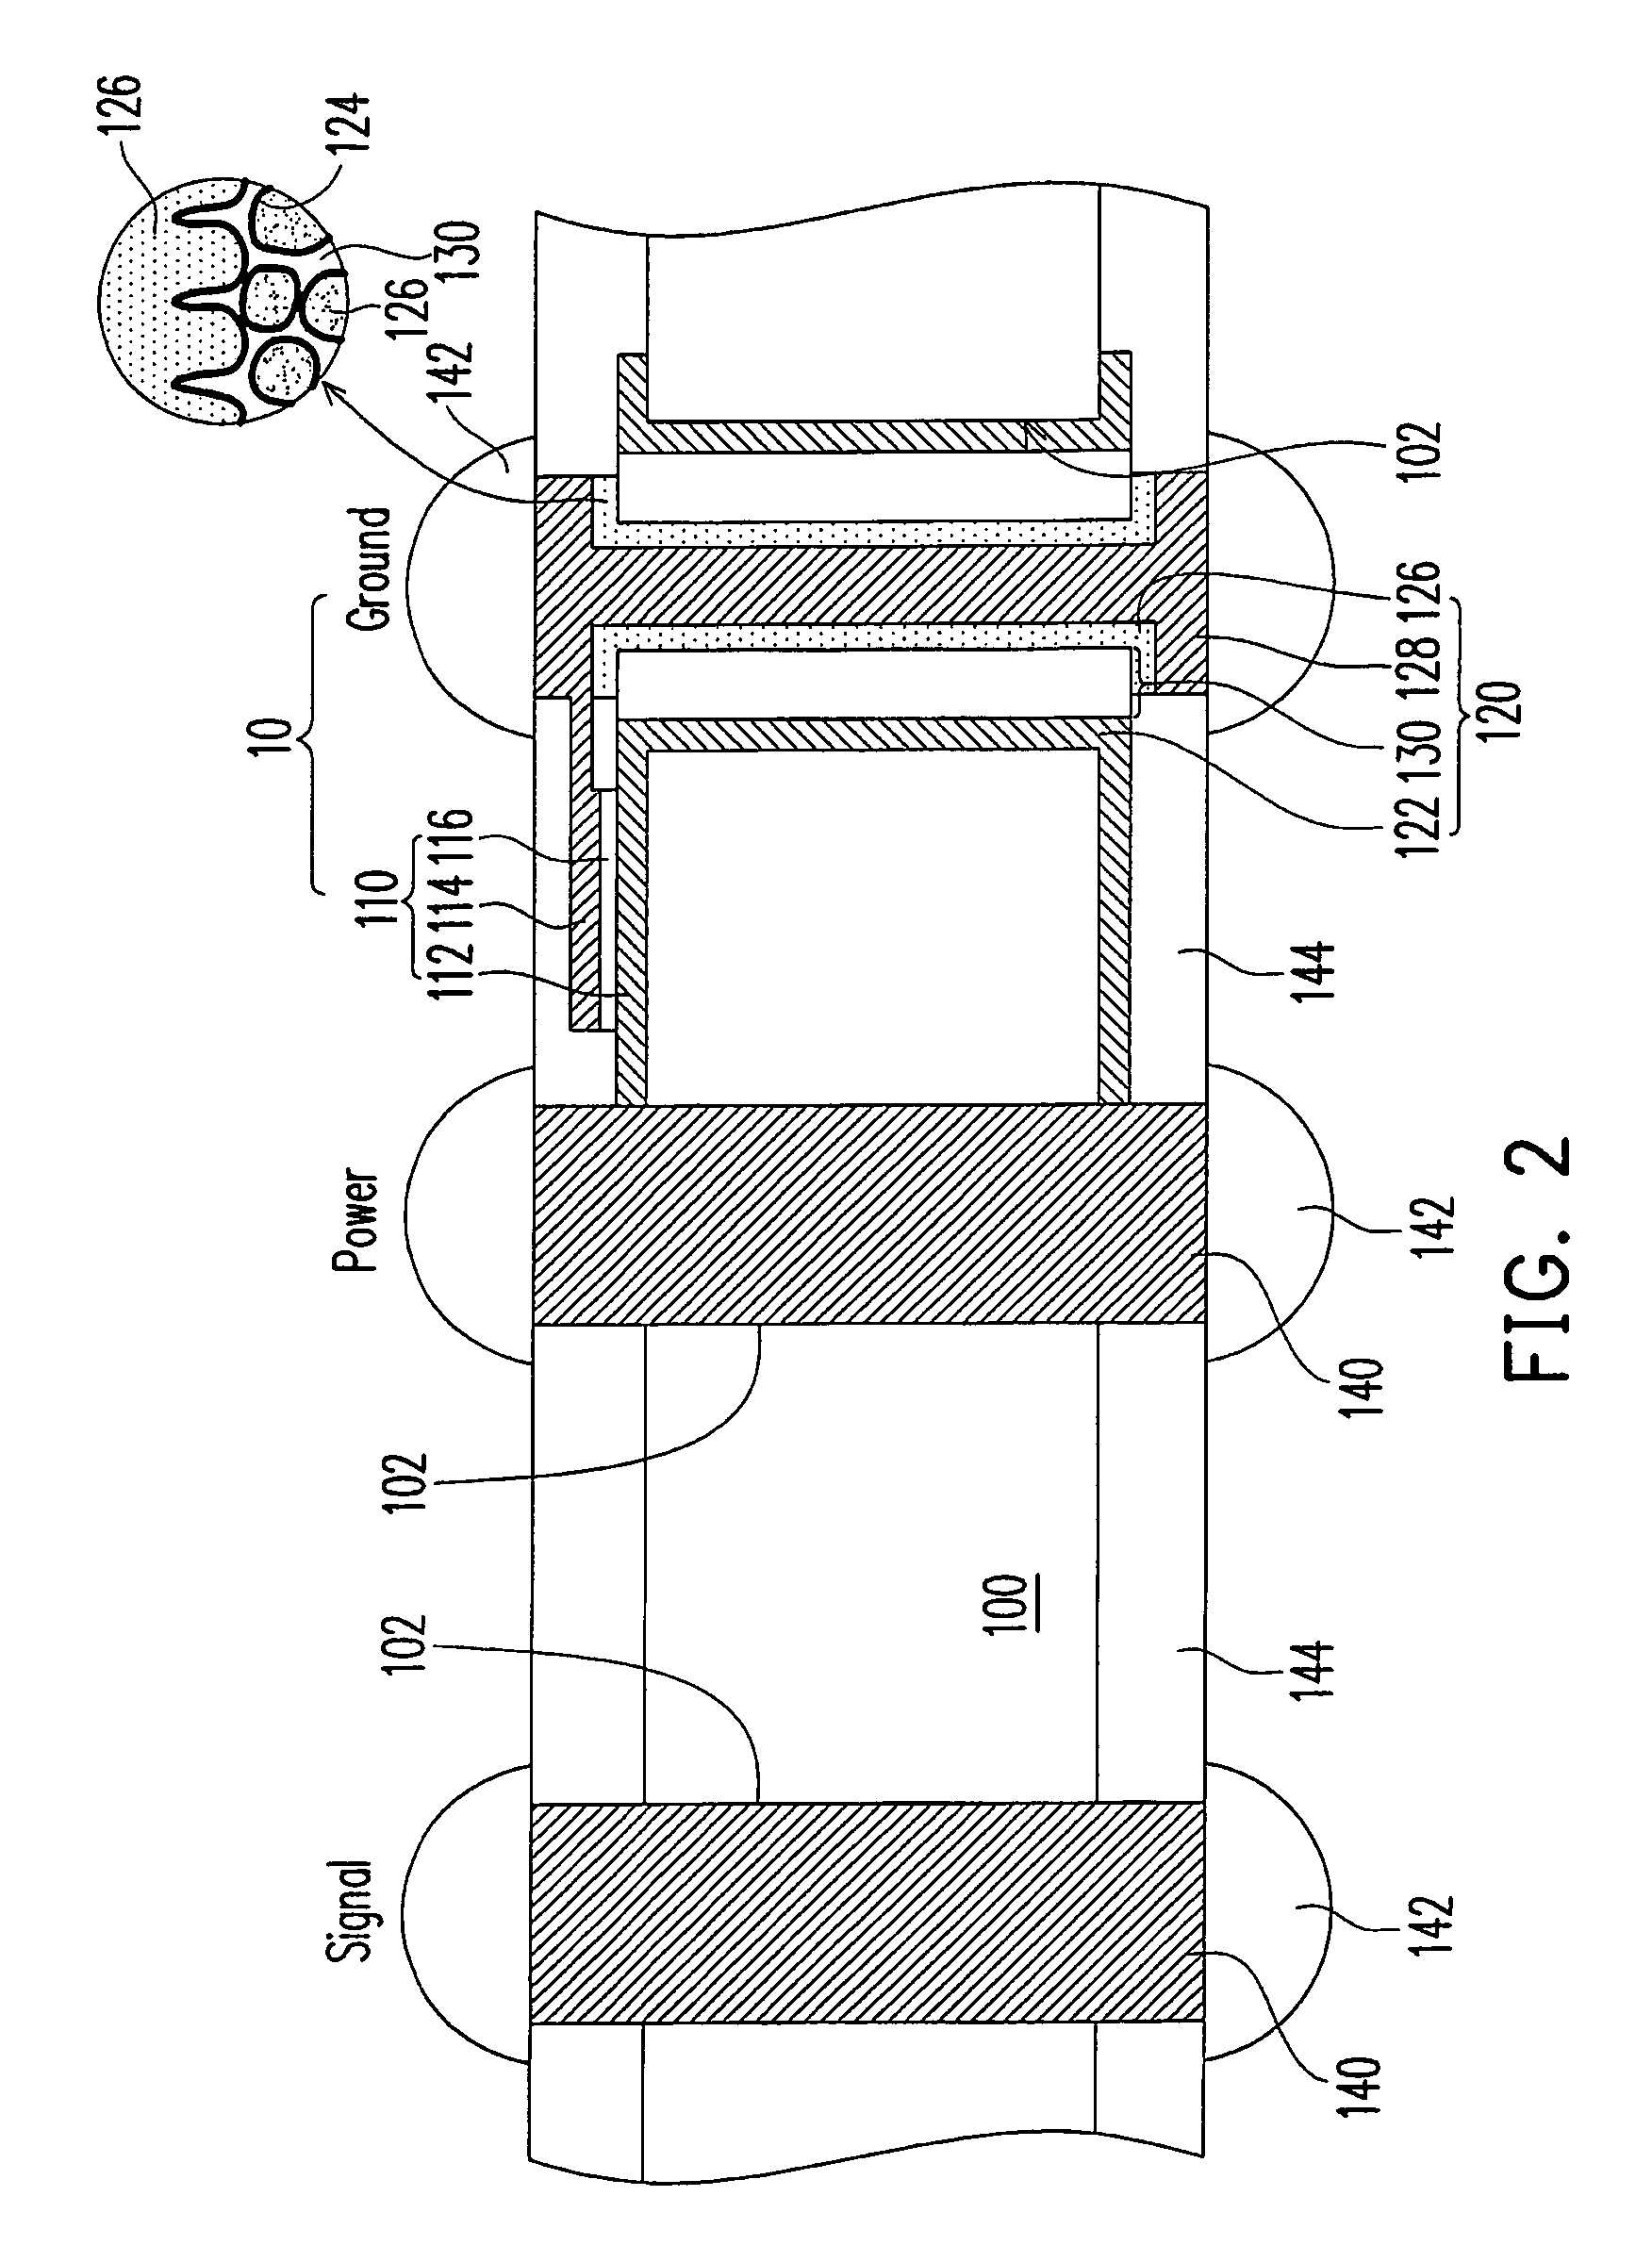 Hybrid capacitor